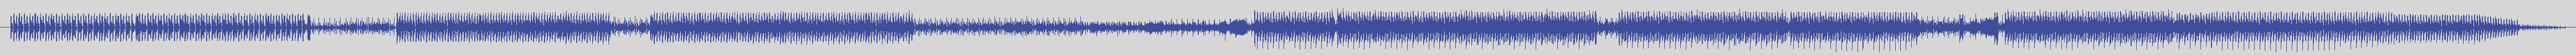 atomic_recordings [AR019] The Clover - Summer Dog [Original Mix] audio wave form